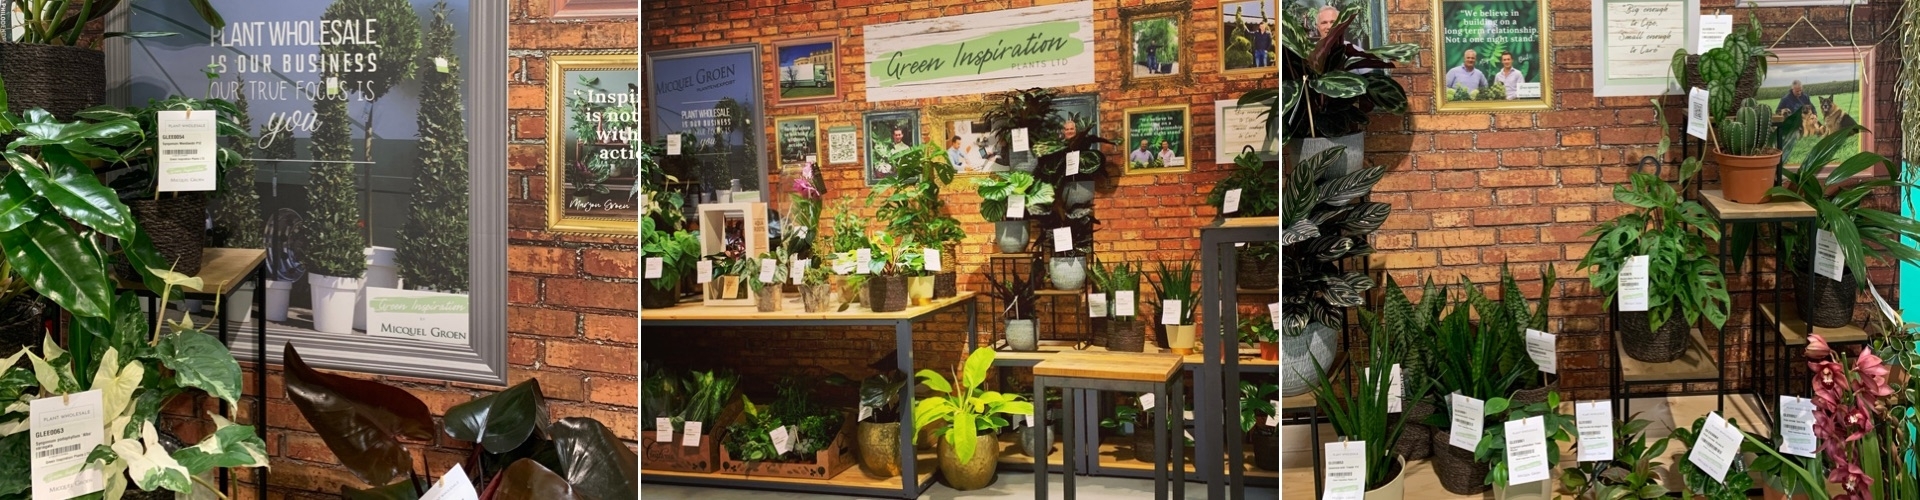 Green Inspiration Plants Ltd. Glee 2021